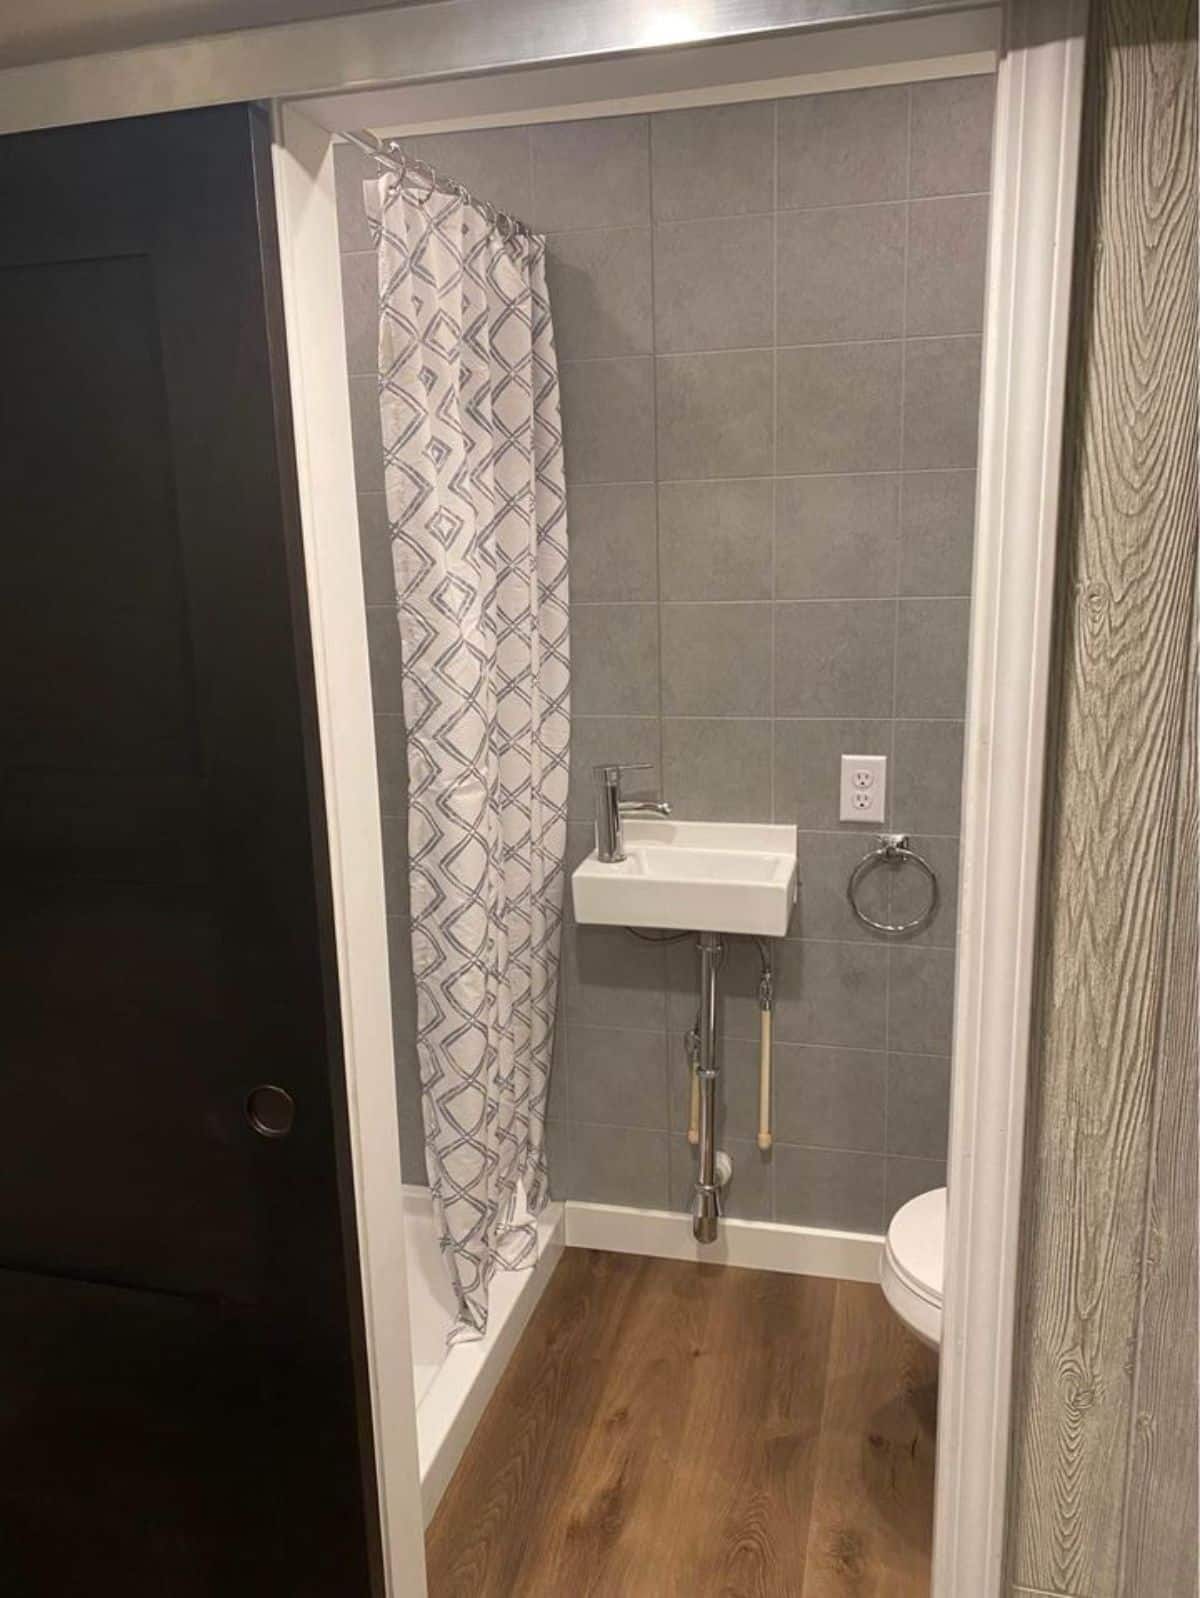 Standard toilet and sink in bathroom